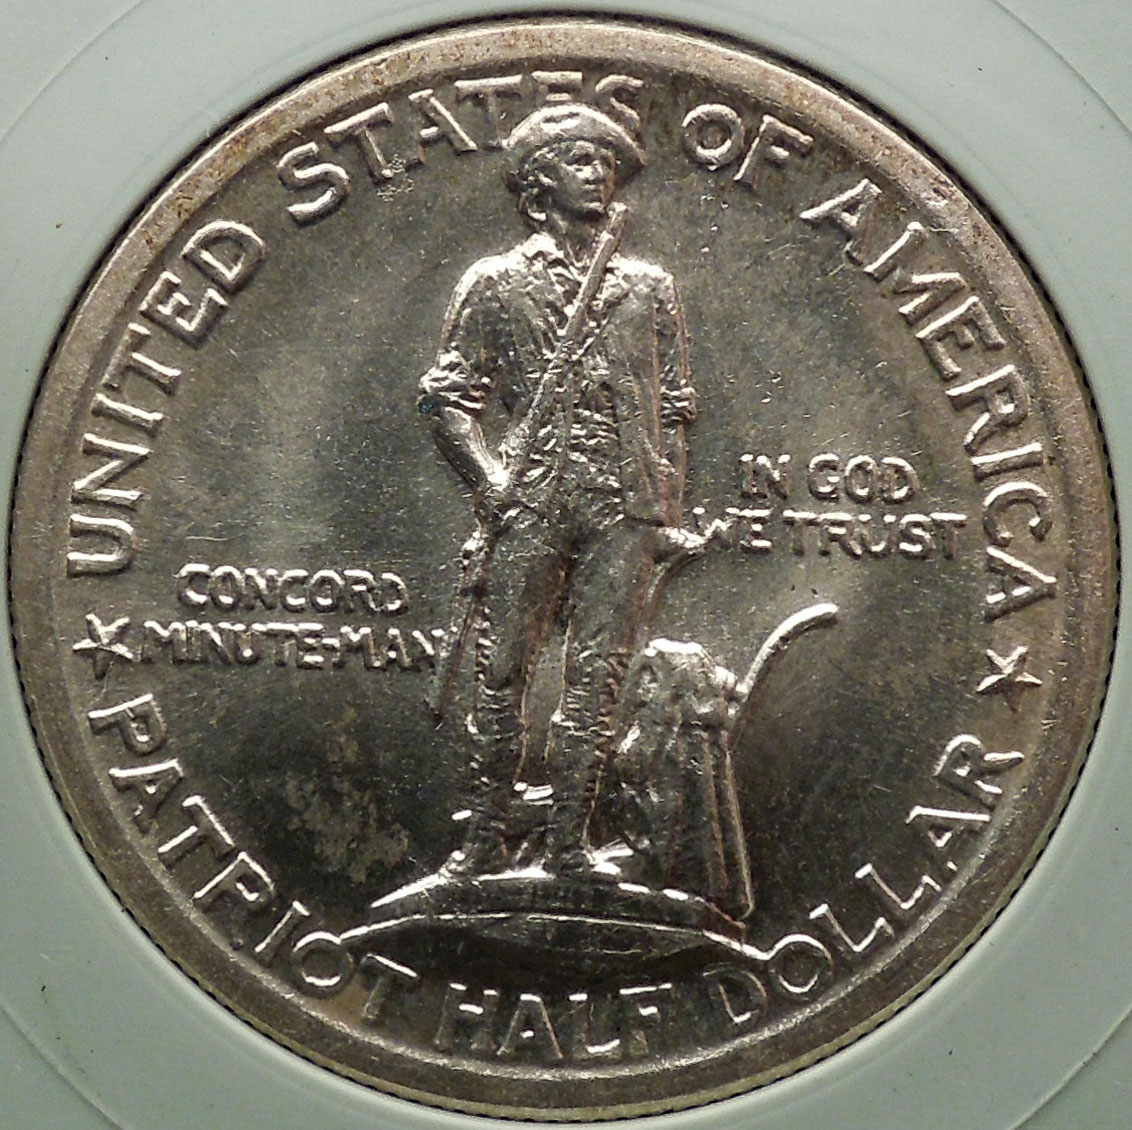 1925 Lexington Concord Minute Man USA Revolutionary War Silver Coin i453781132 x 1130